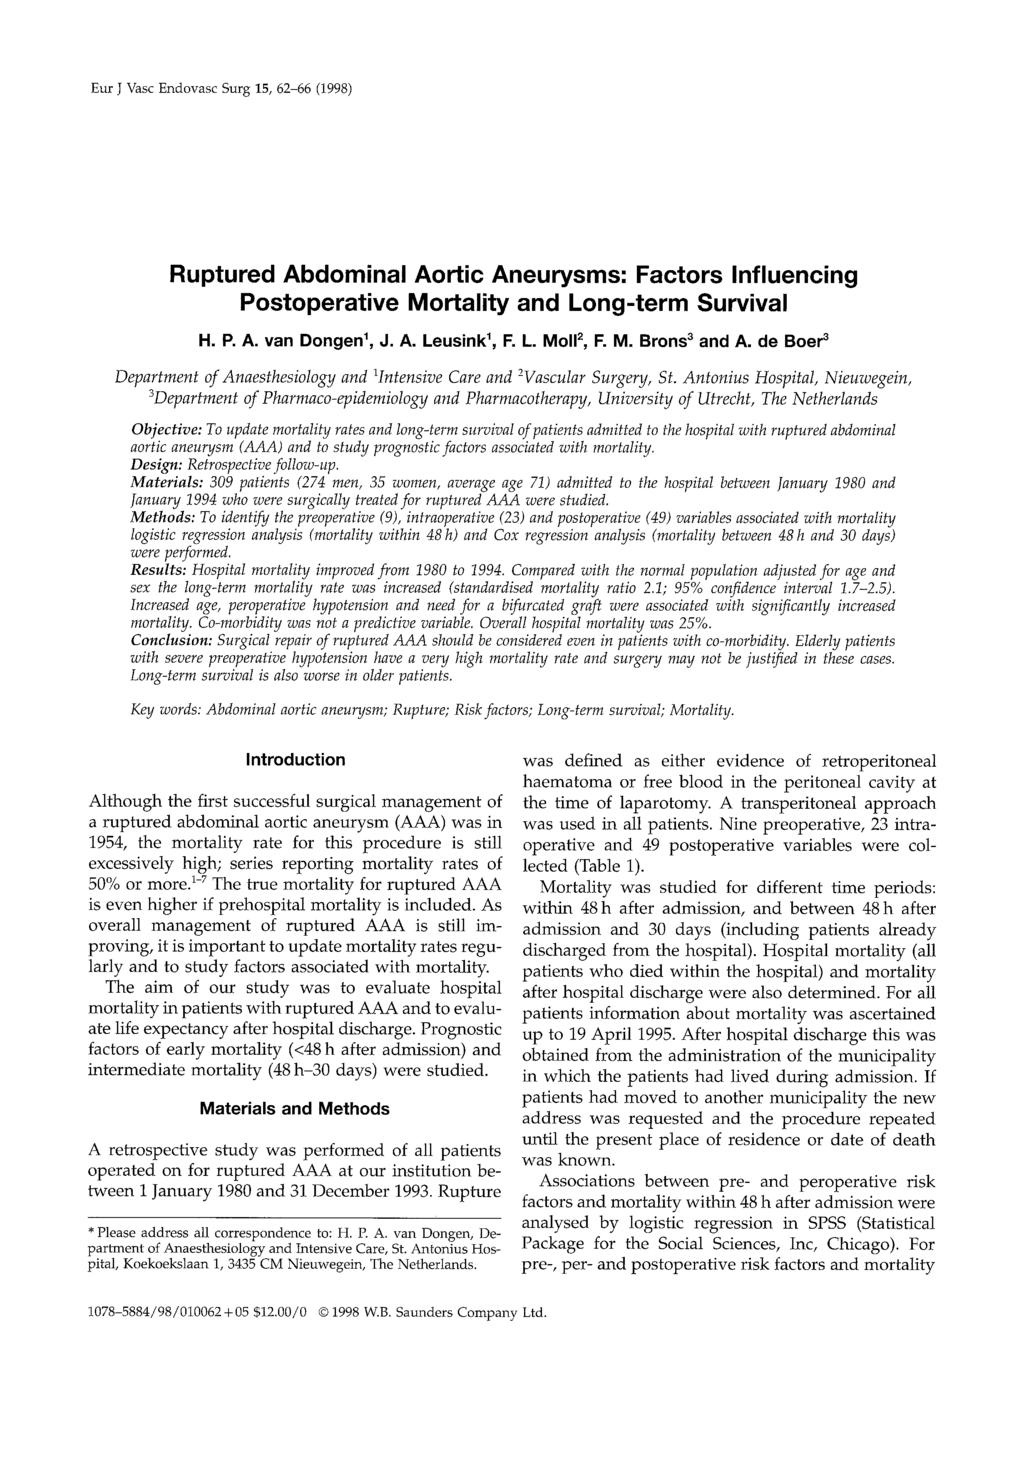 Eur J Vasc Endovasc Surg 15, 62-66 (1998) Ruptured Abdominal Aortic Aneurysms: Factors Influencing Postoperative Mortality and Long-term Survival H. P. A. van Dongen 1, J. A. Leusink% F. L. Moll% F.